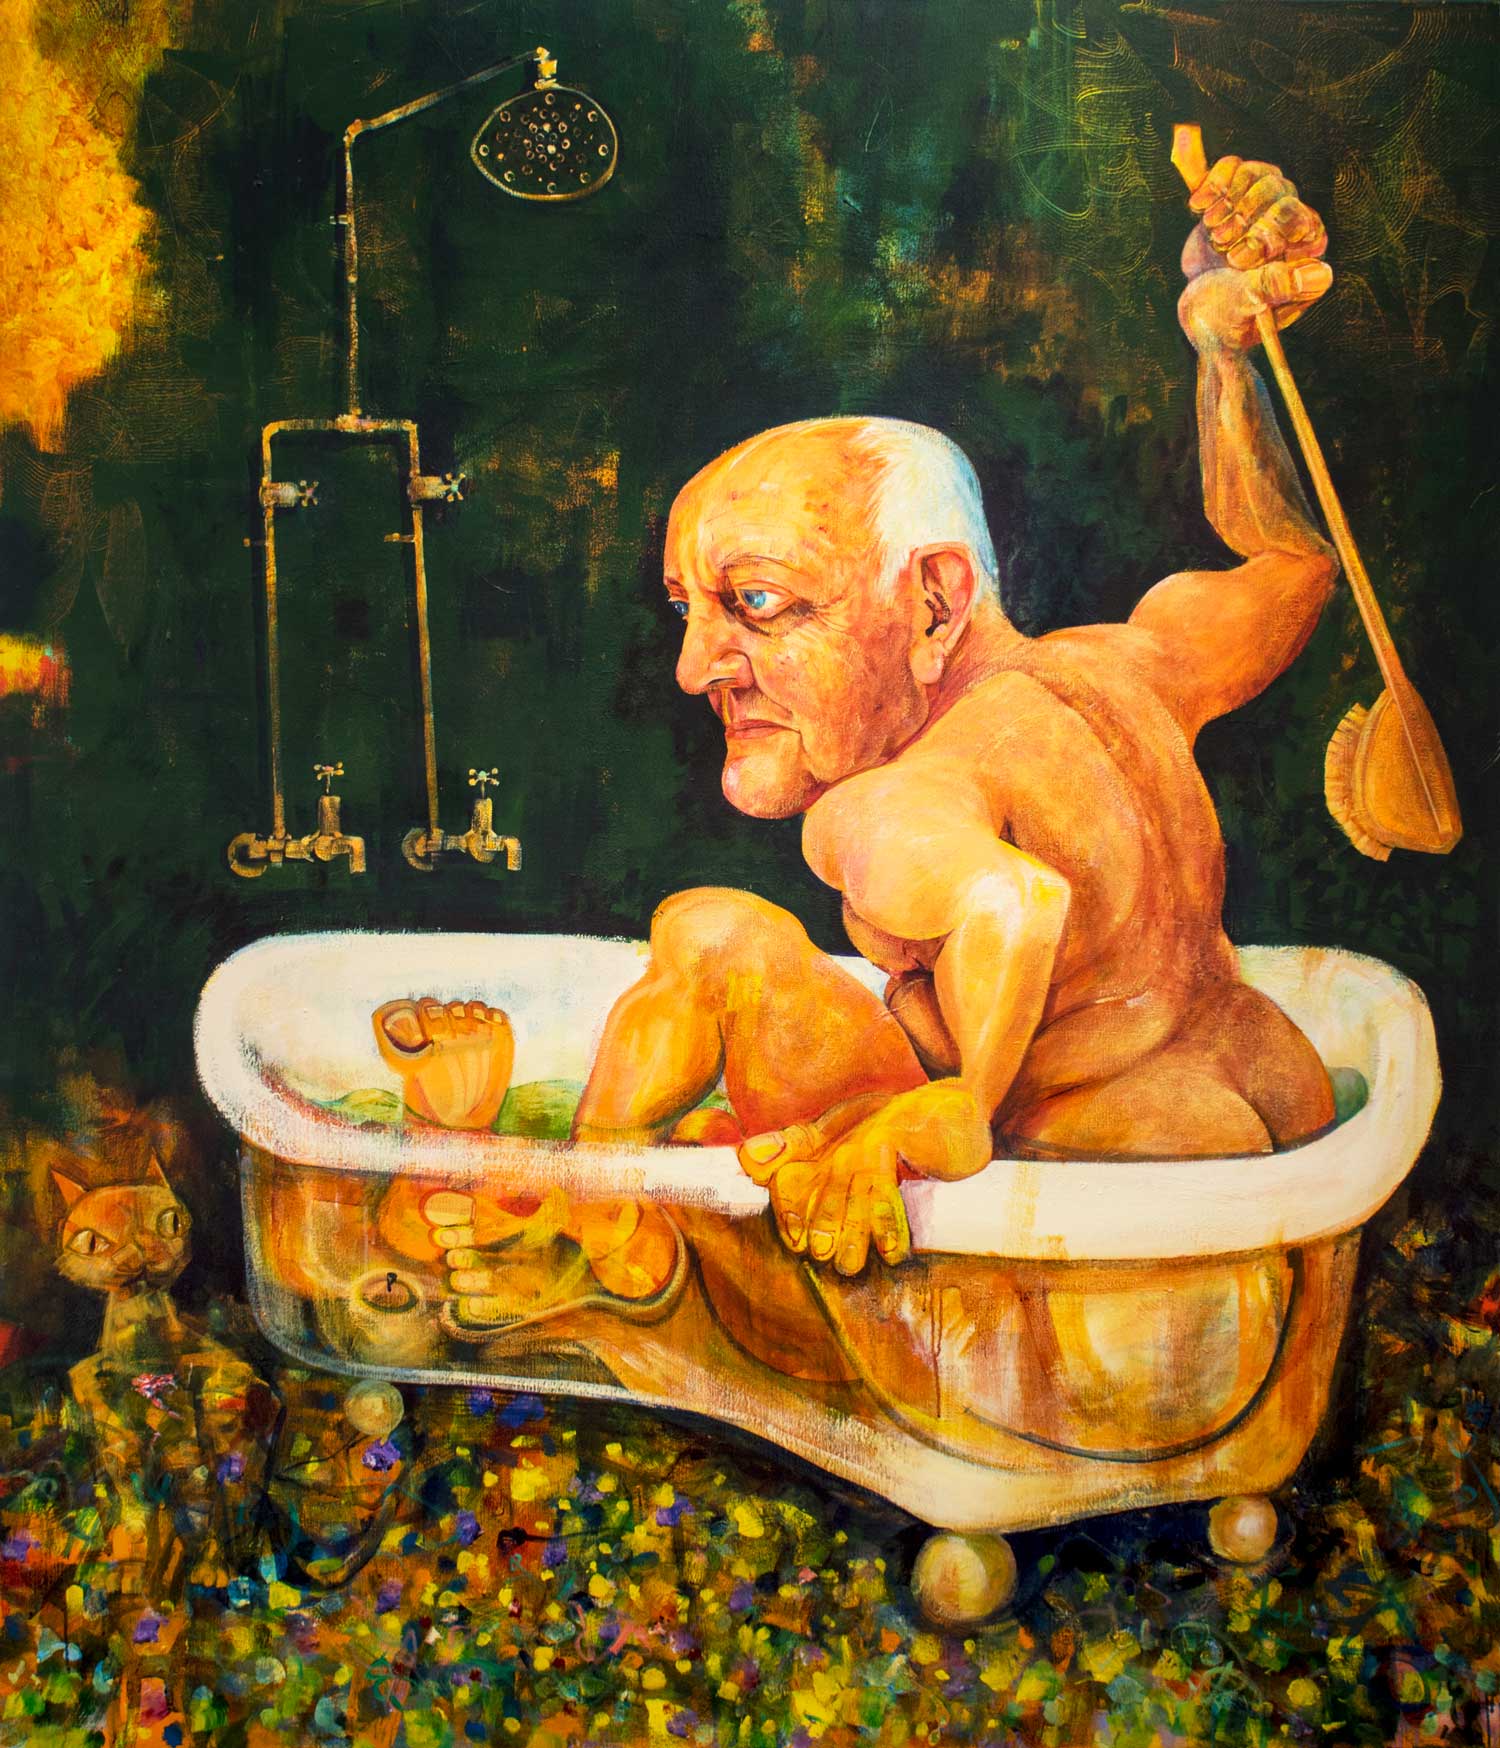 Victor-Rubin-John-Olsen-Part-II-in-his-Bath-2010-Acrylic-on-linen-199x168cm-LR